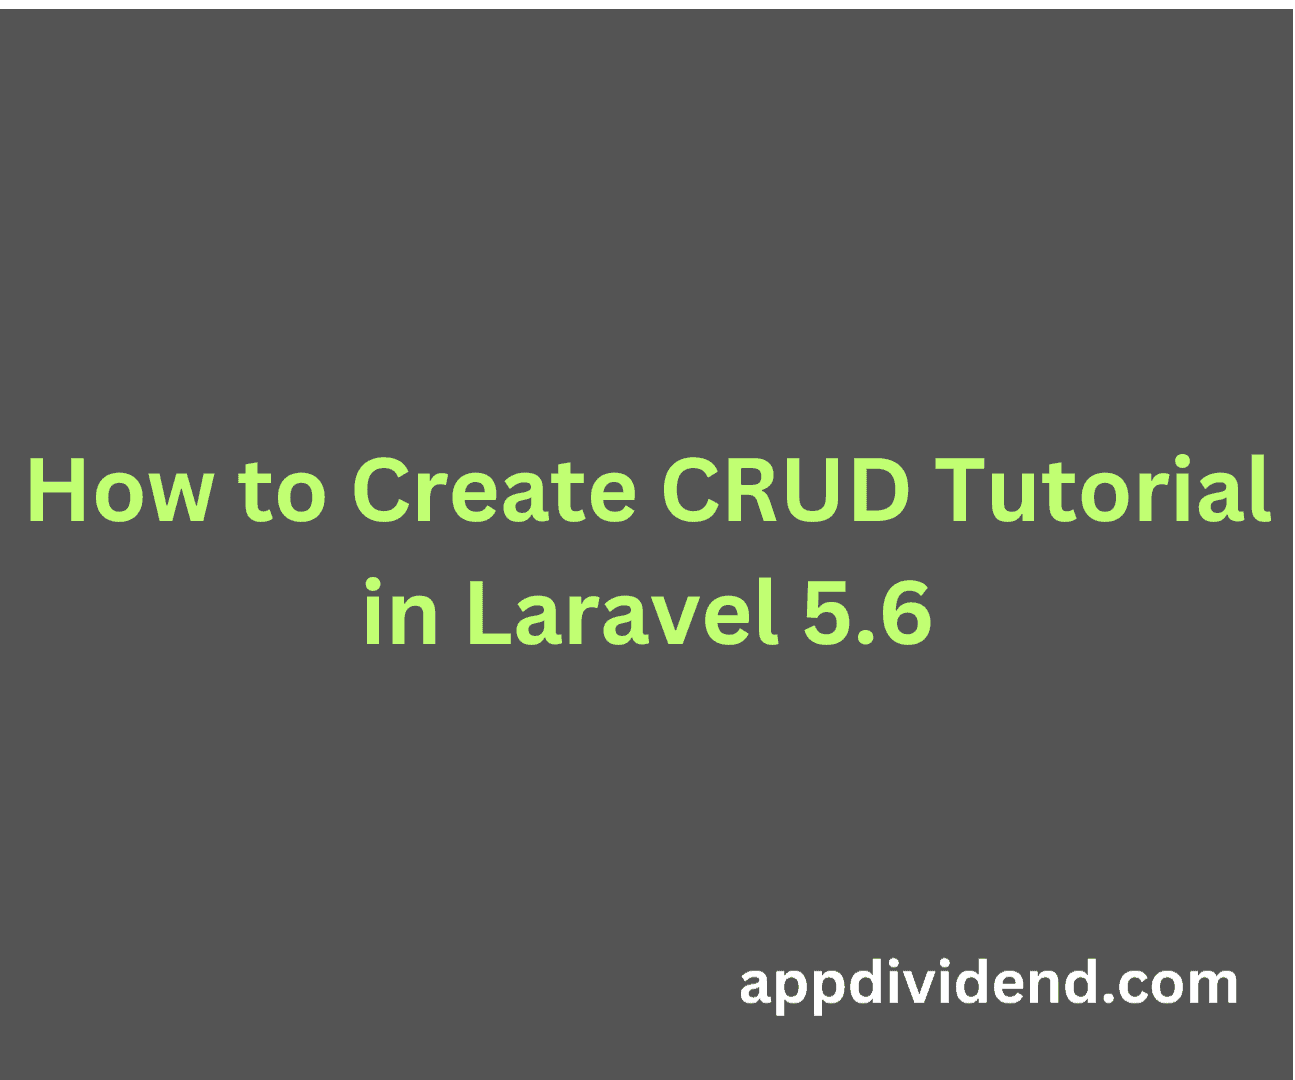 How to Create CRUD Tutorial in Laravel 5.6